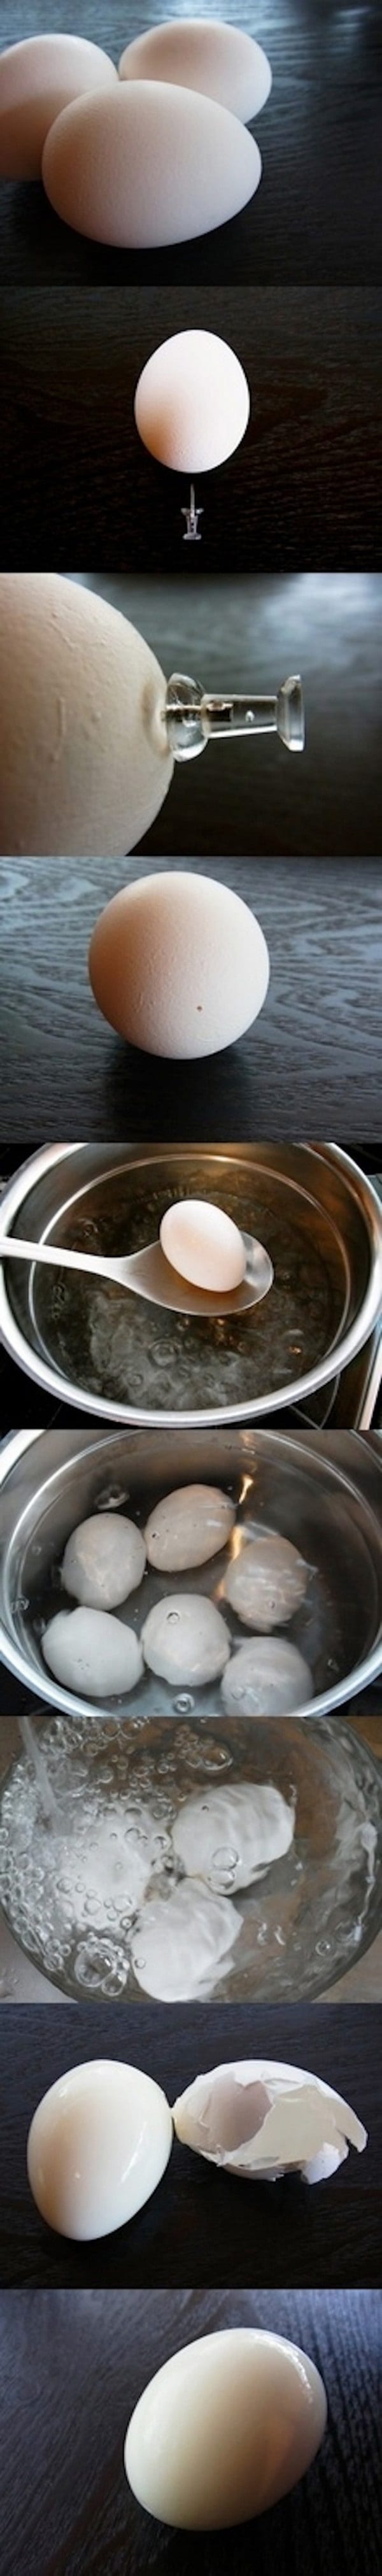 чистим яйца